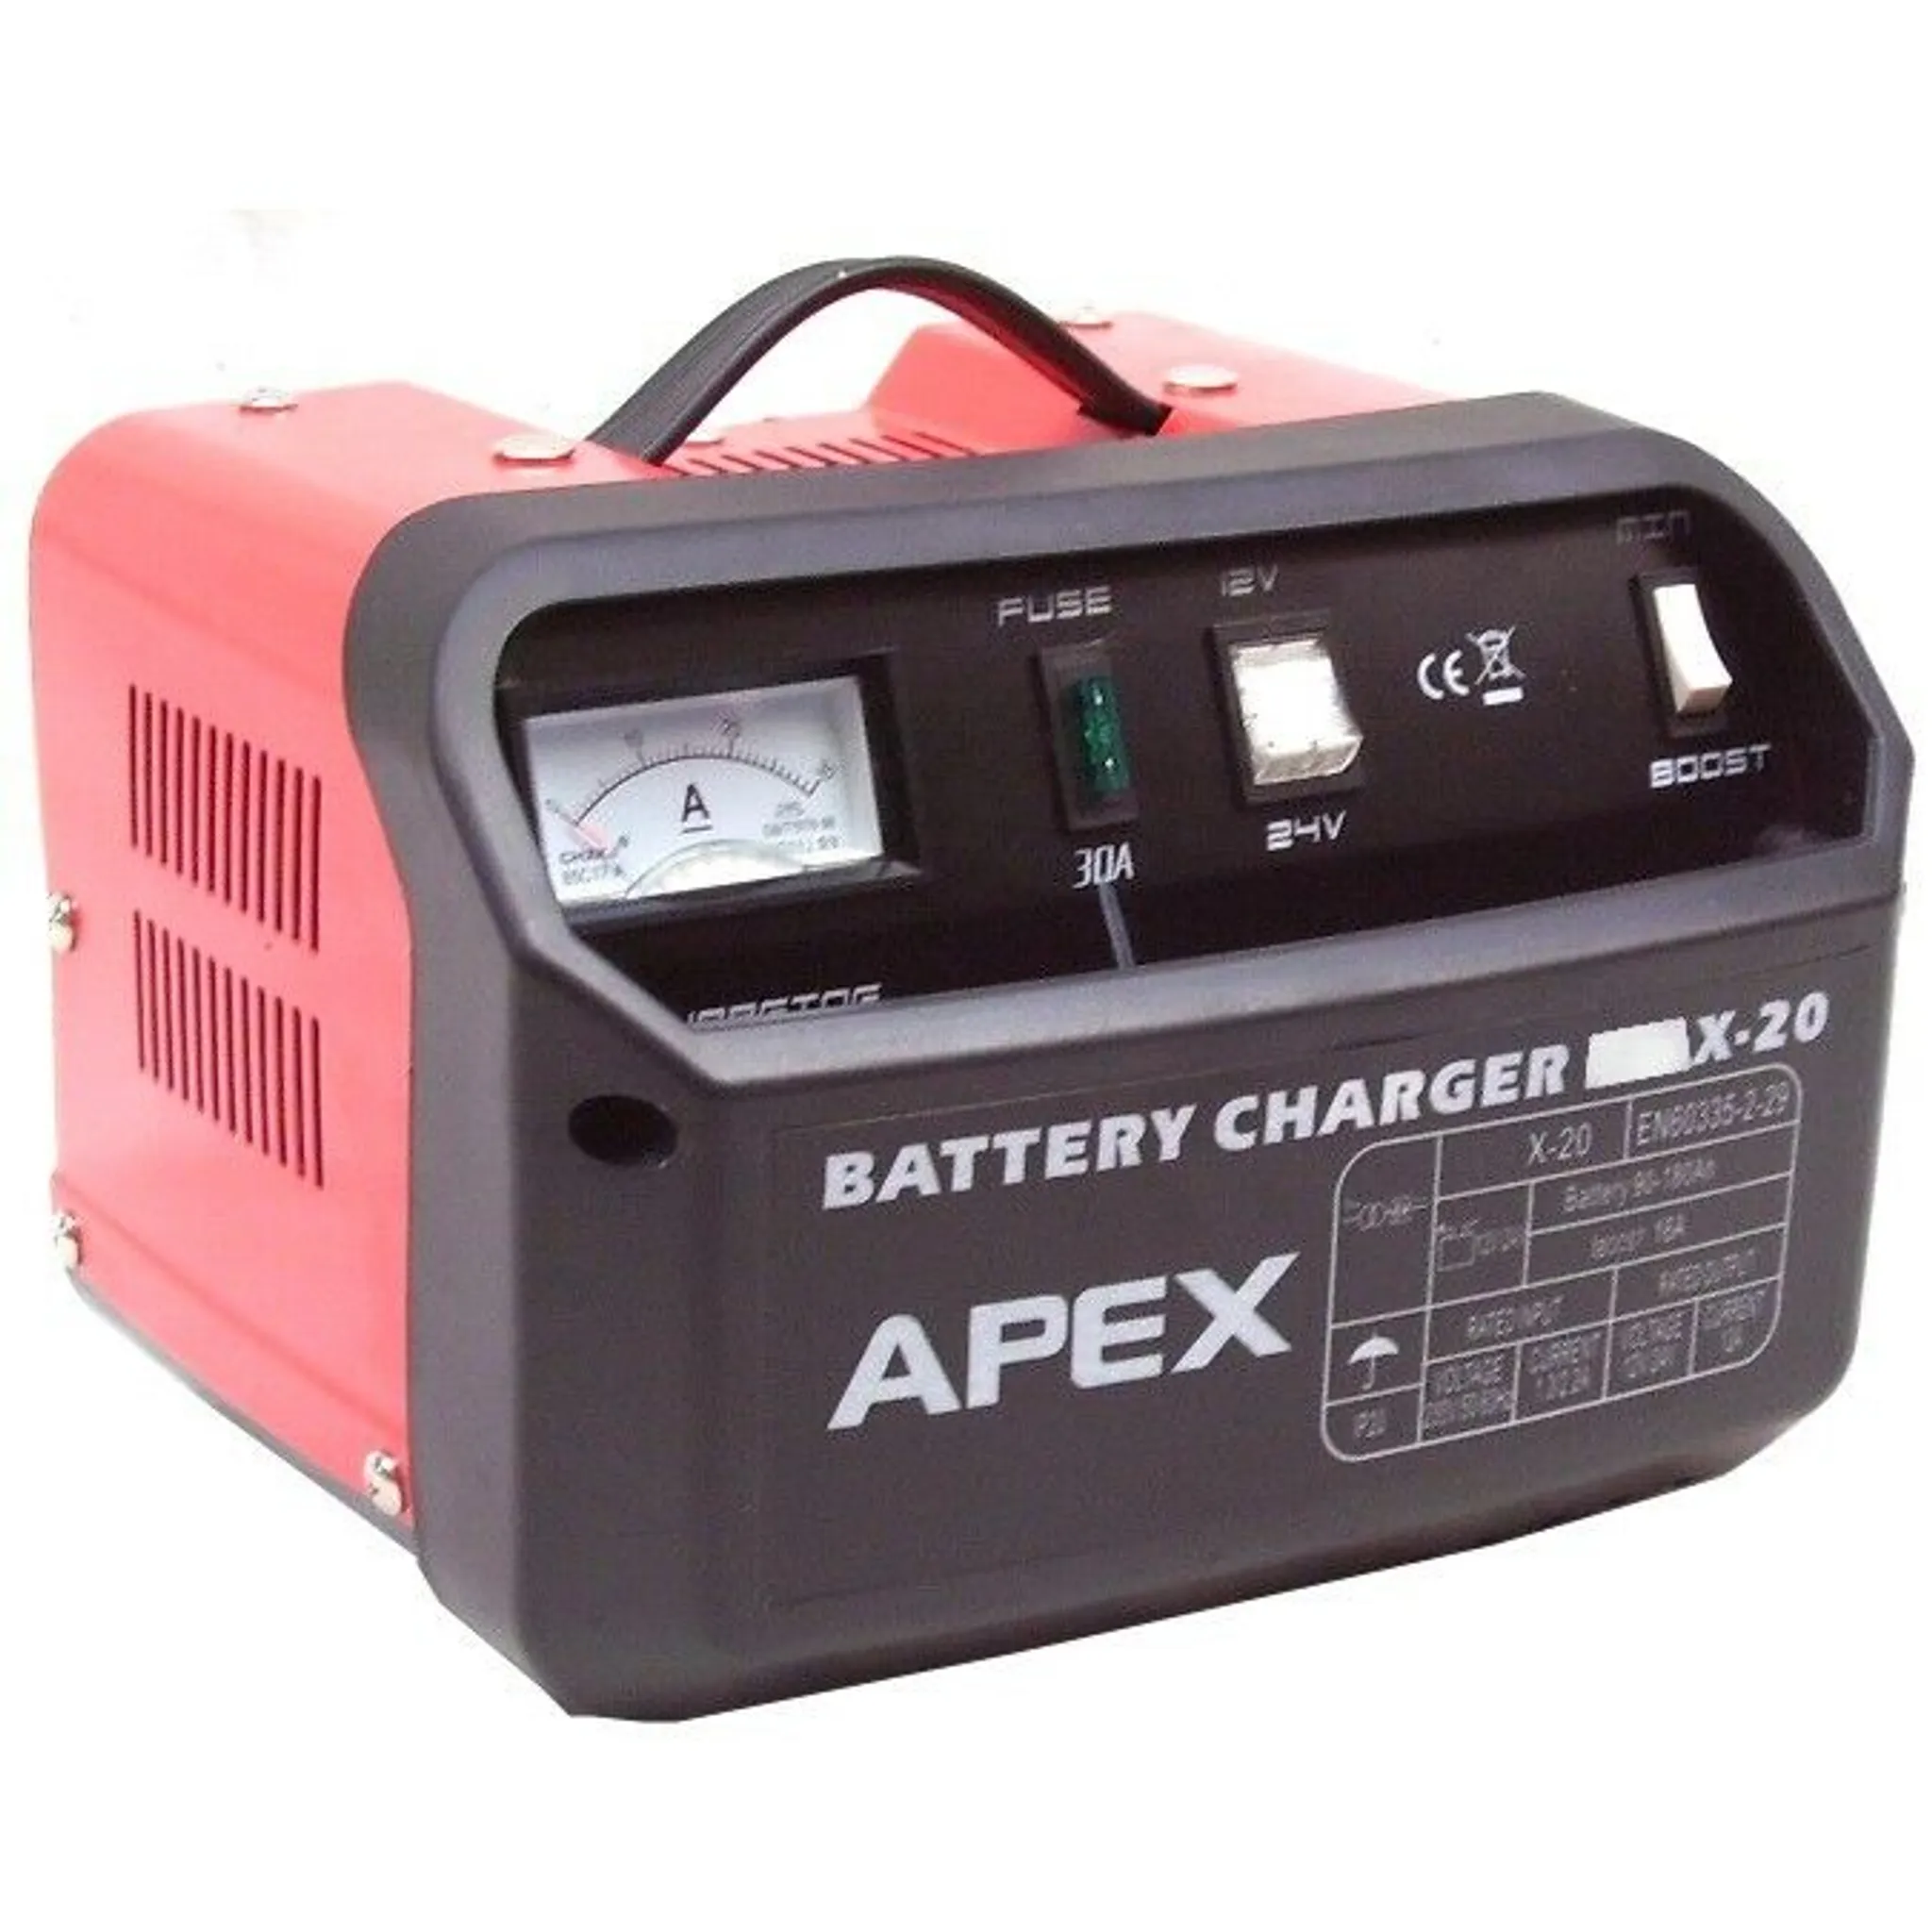 MSW Autobatterie Ladegerät Kfz Pkw Ladegerät Batterie 12 24 V 15 20 A  Autobatterie-Ladegerät